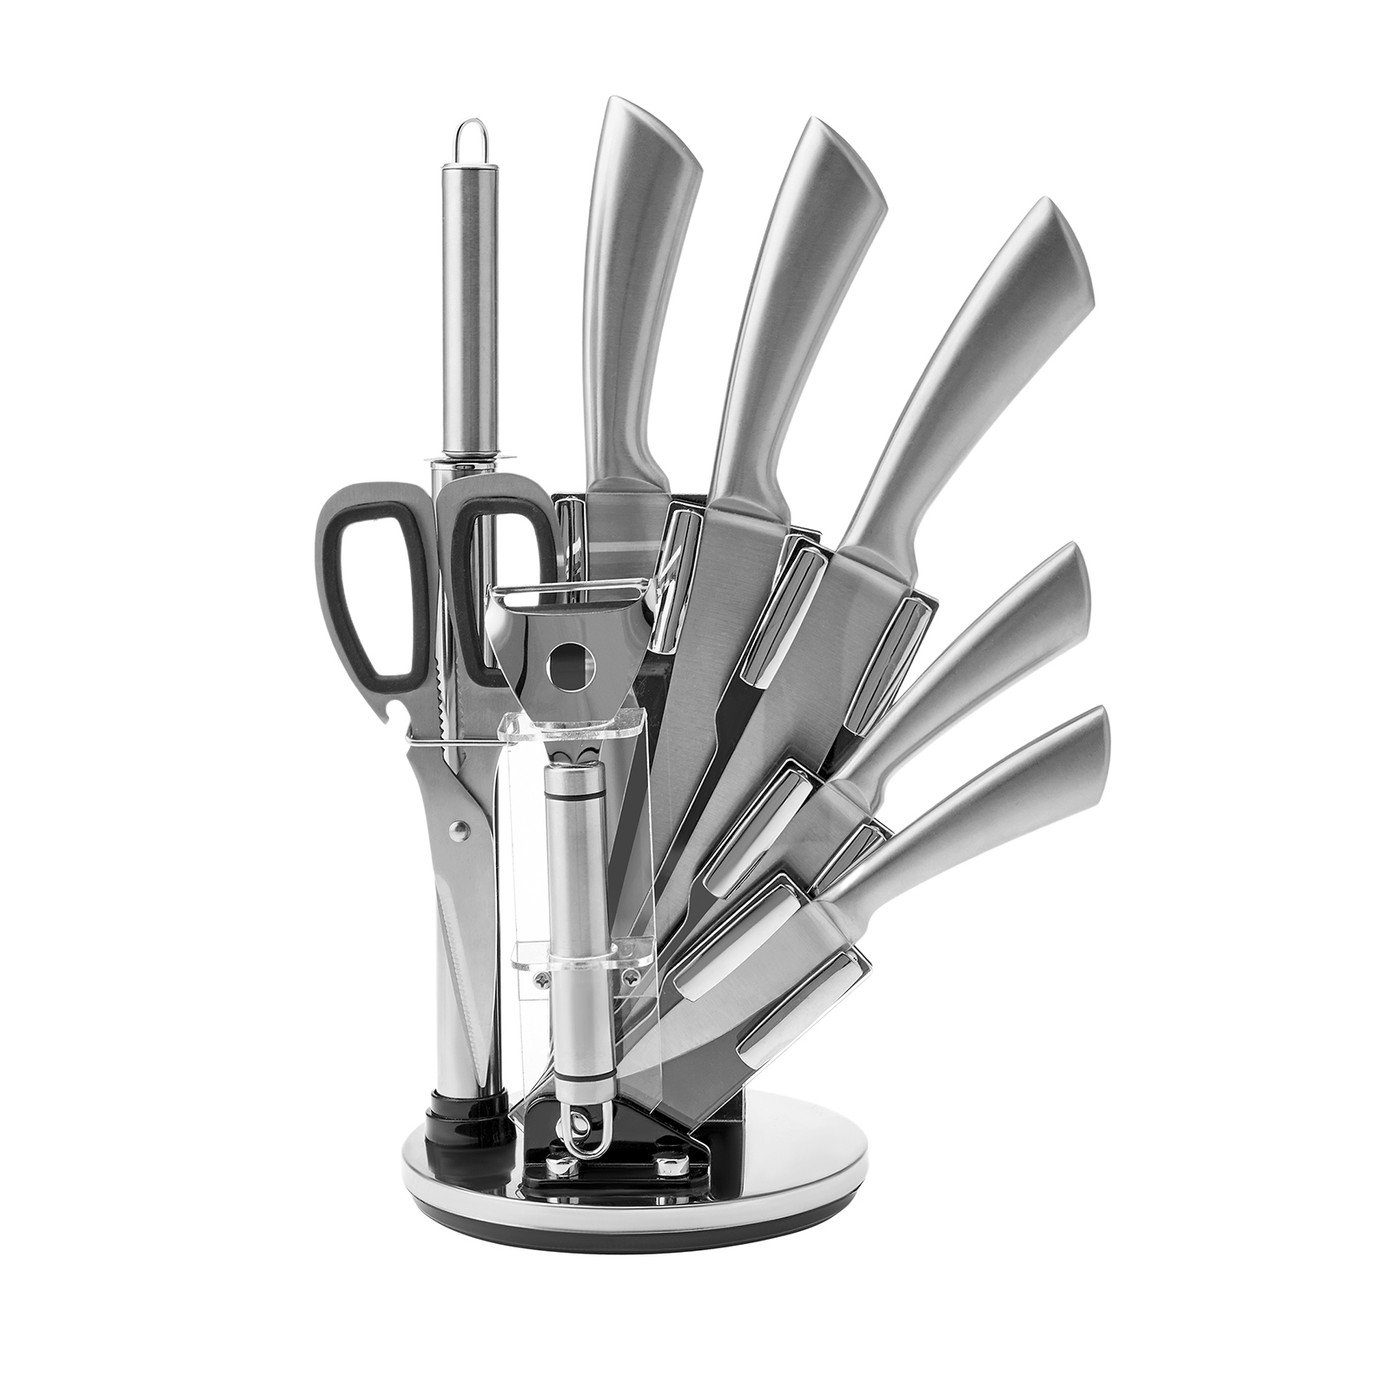 Karaca Messer-Set Meister Palm Steel Messerset, 9-teilig, Brotmesser